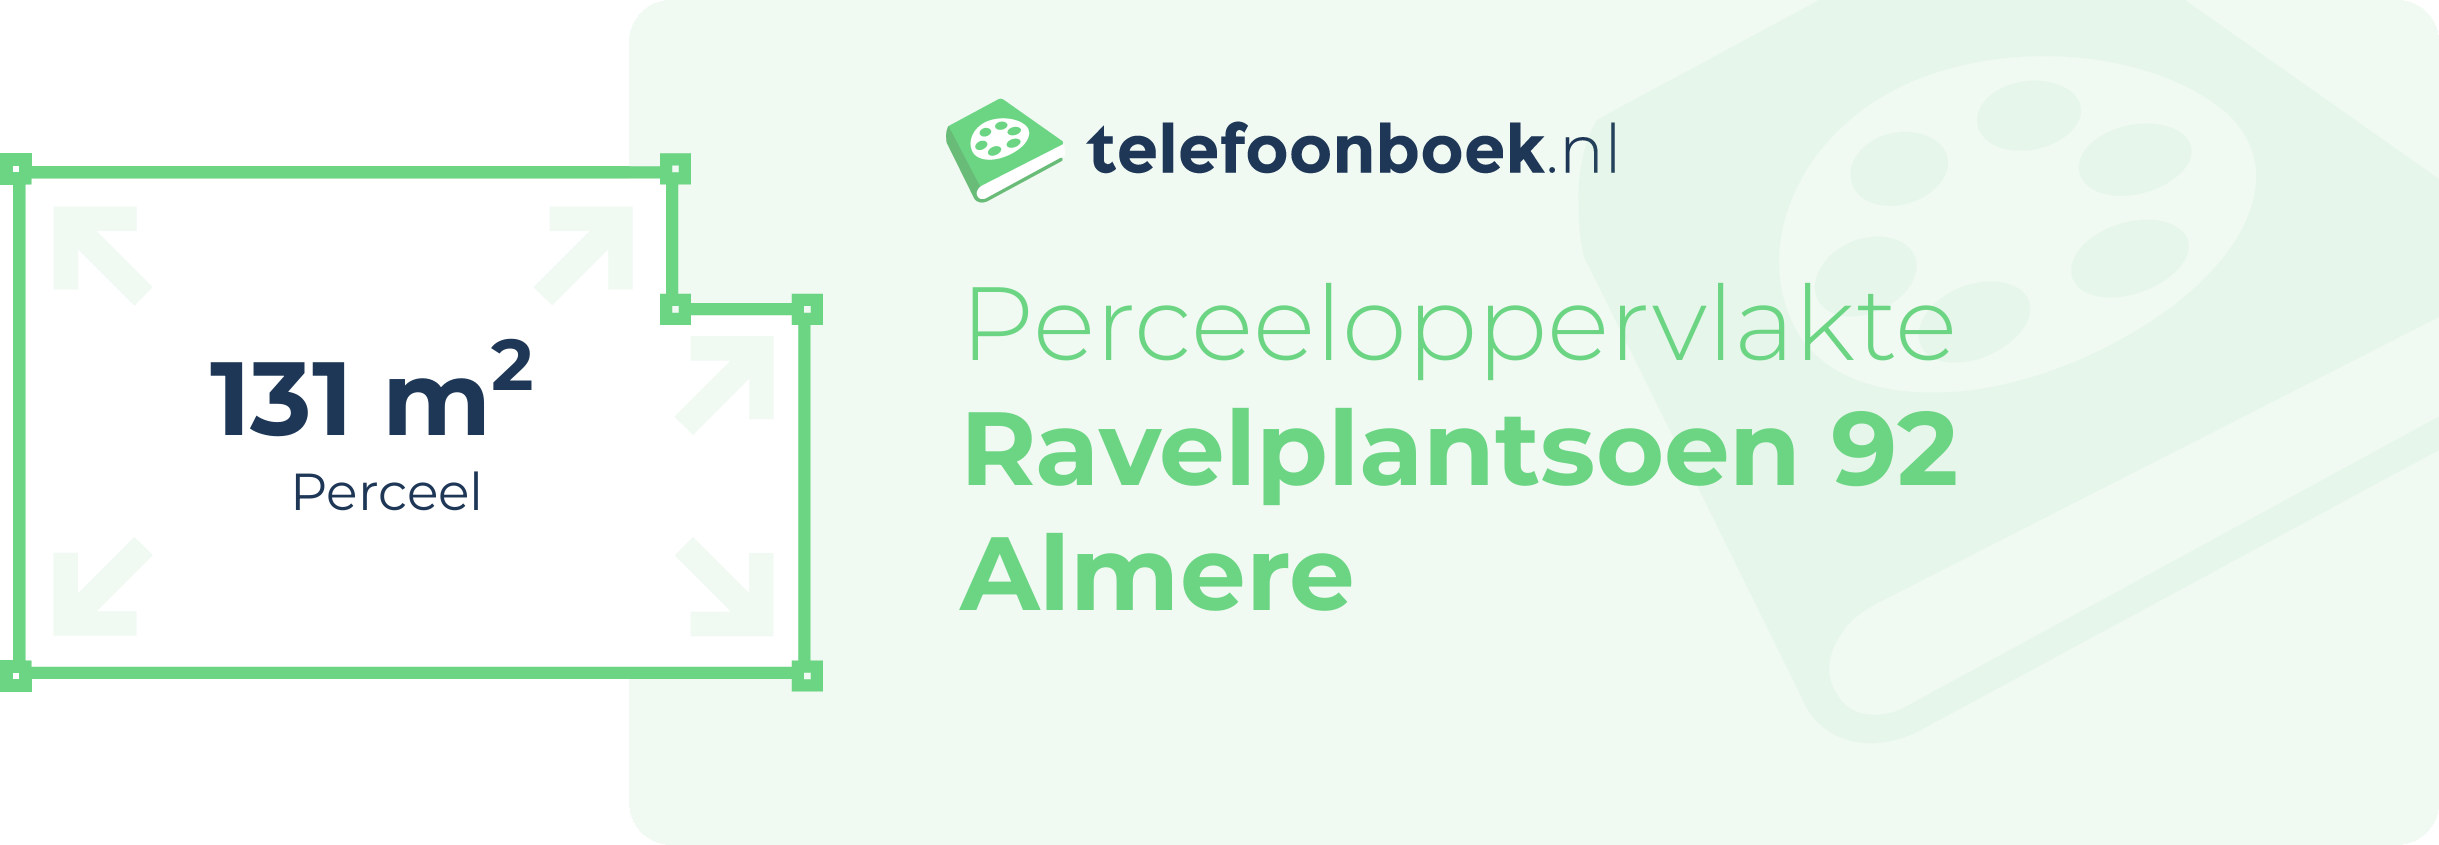 Perceeloppervlakte Ravelplantsoen 92 Almere